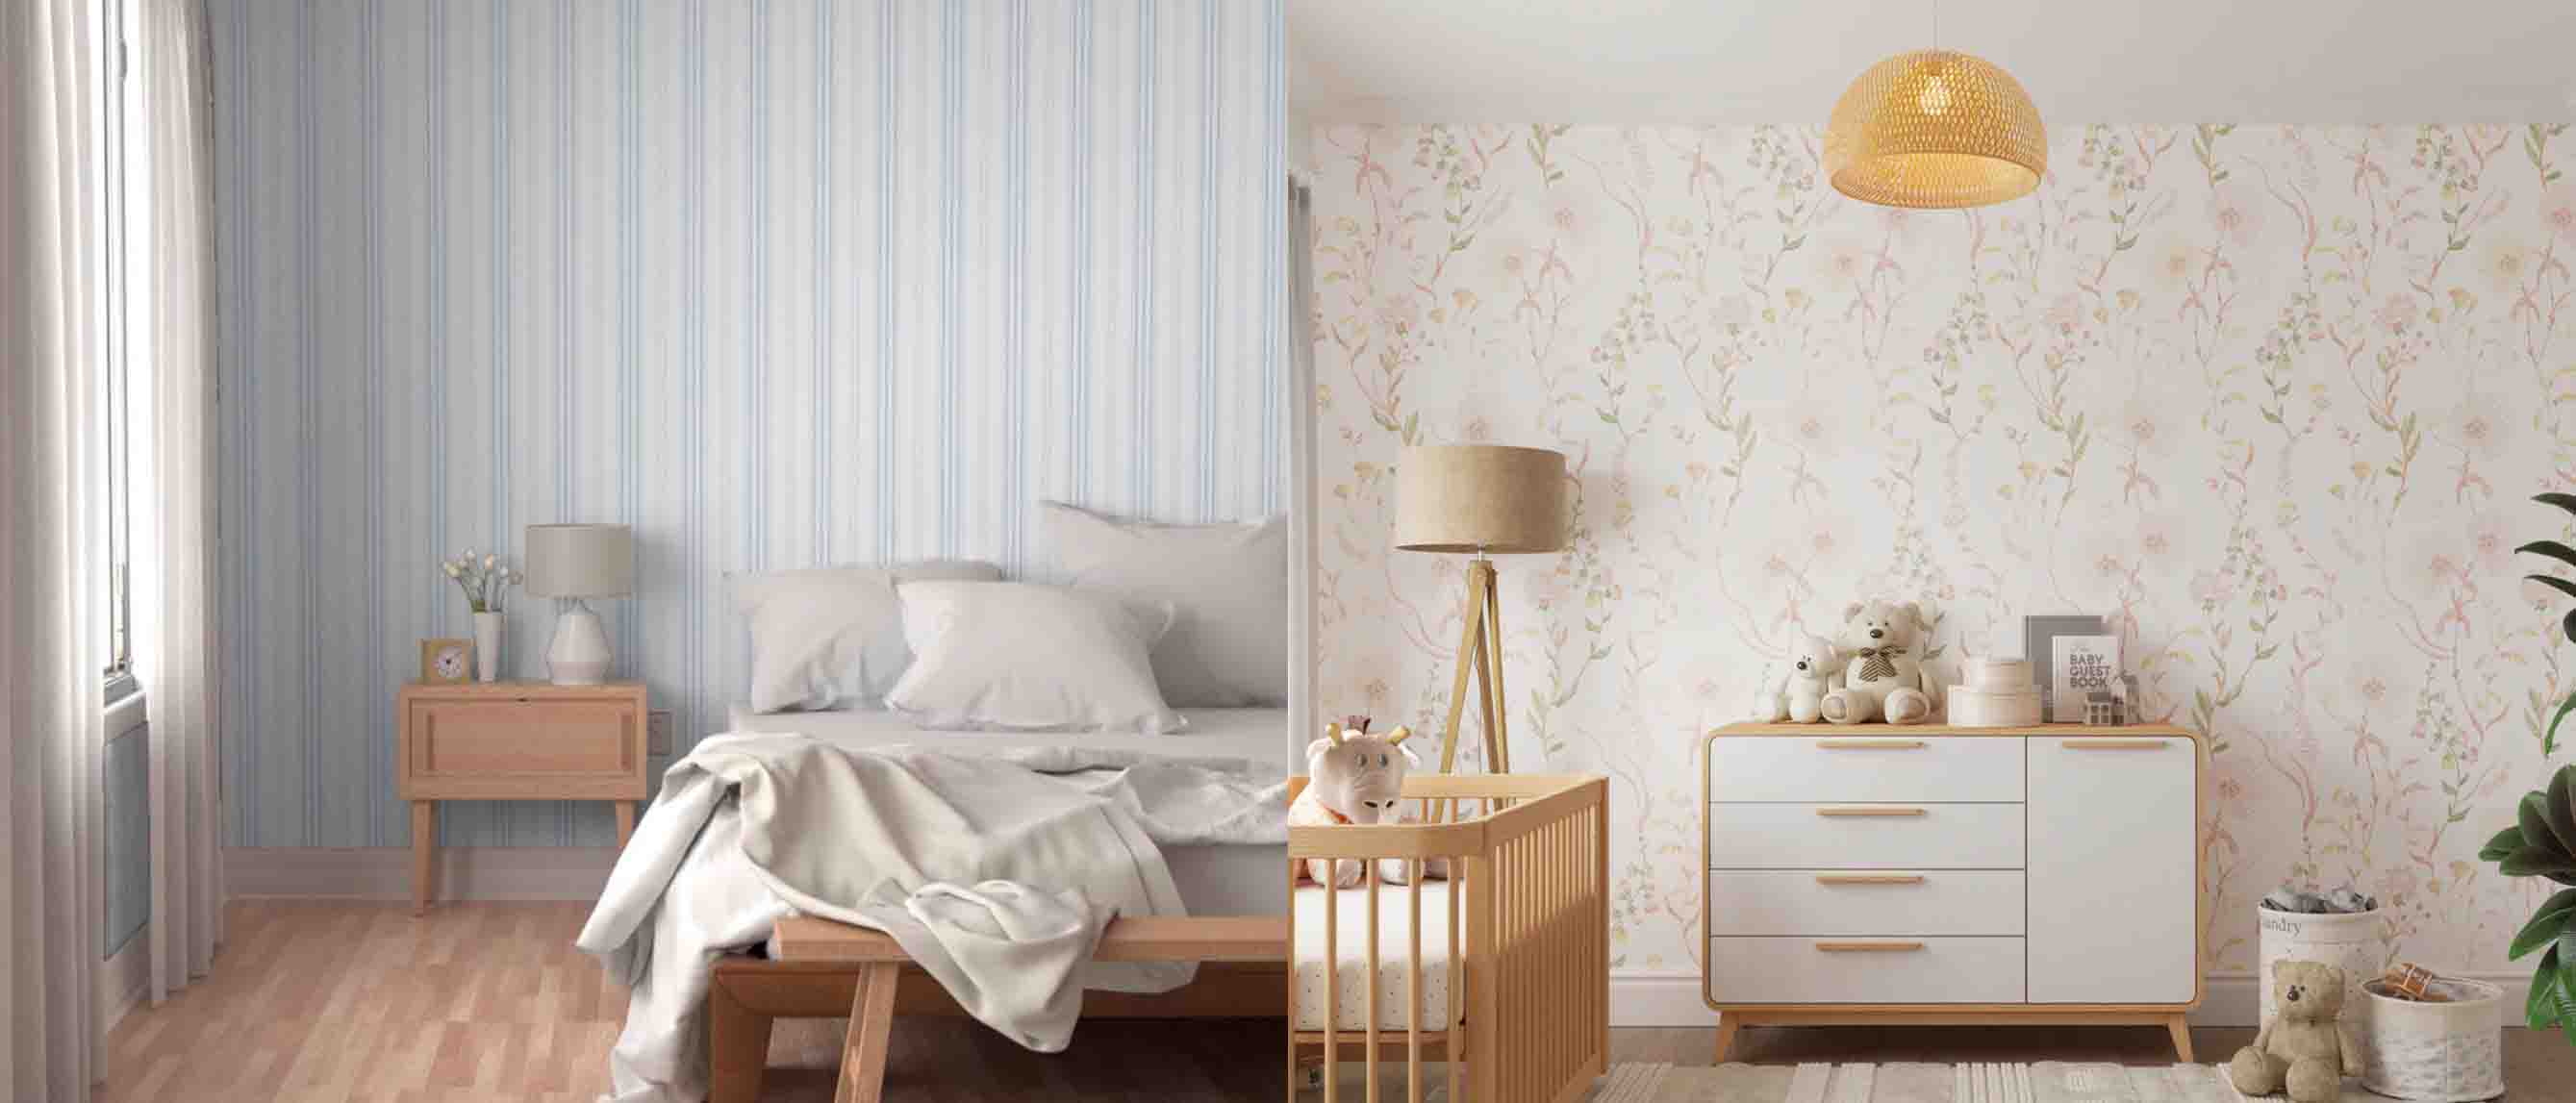 Image of stripe wallpaper in bedroom and floral wallpaper in nursery room